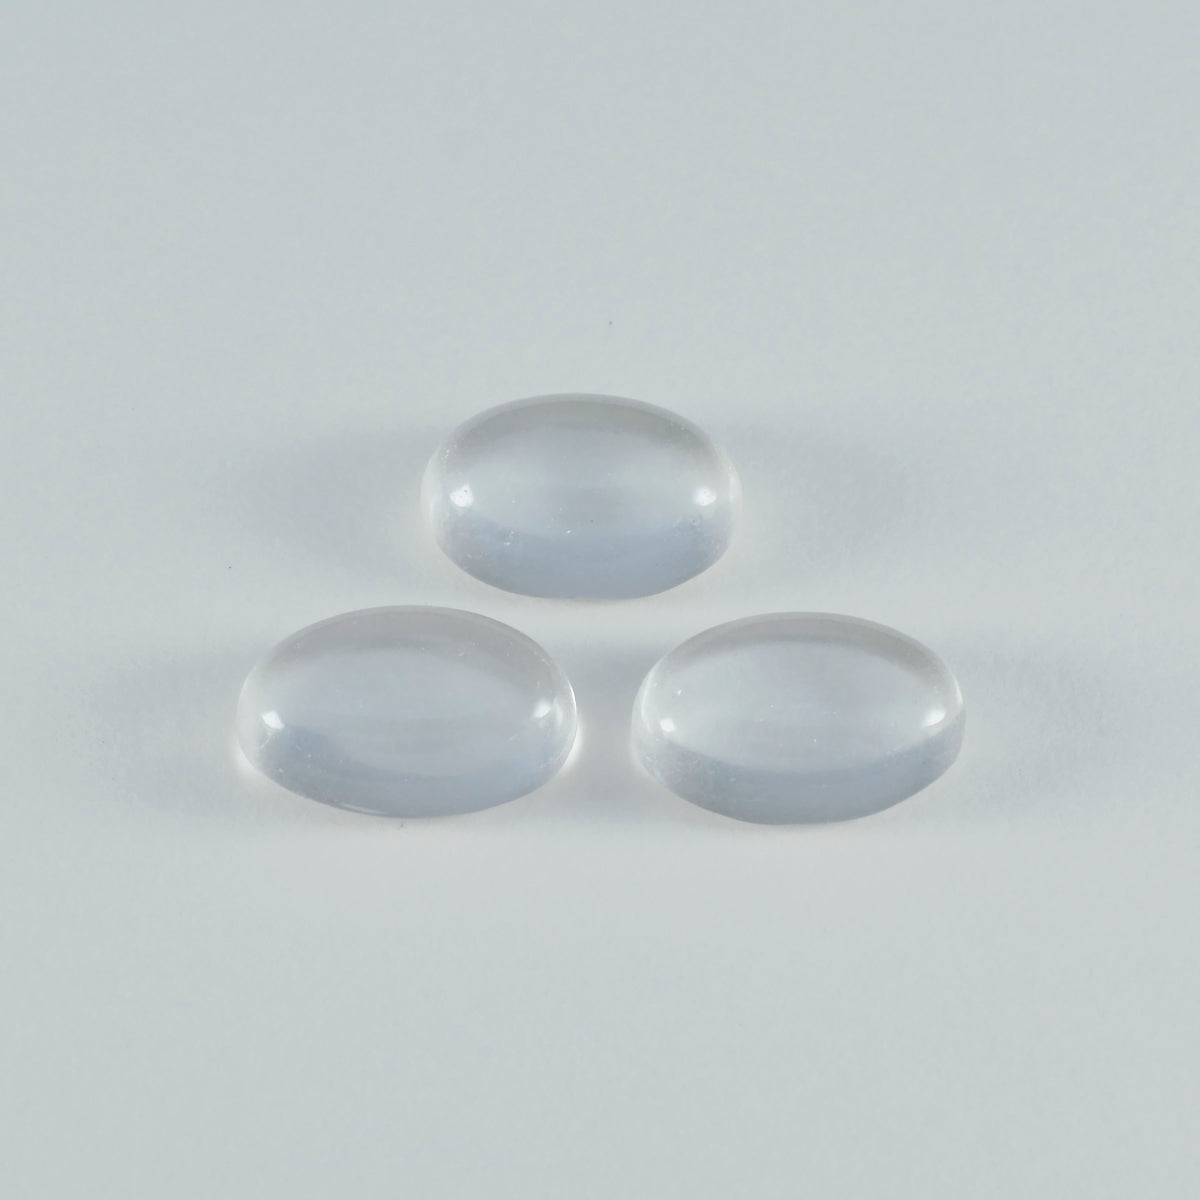 Riyogems 1PC witte kristalkwarts cabochon 10x14 mm ovale vorm verrassende kwaliteit losse edelsteen